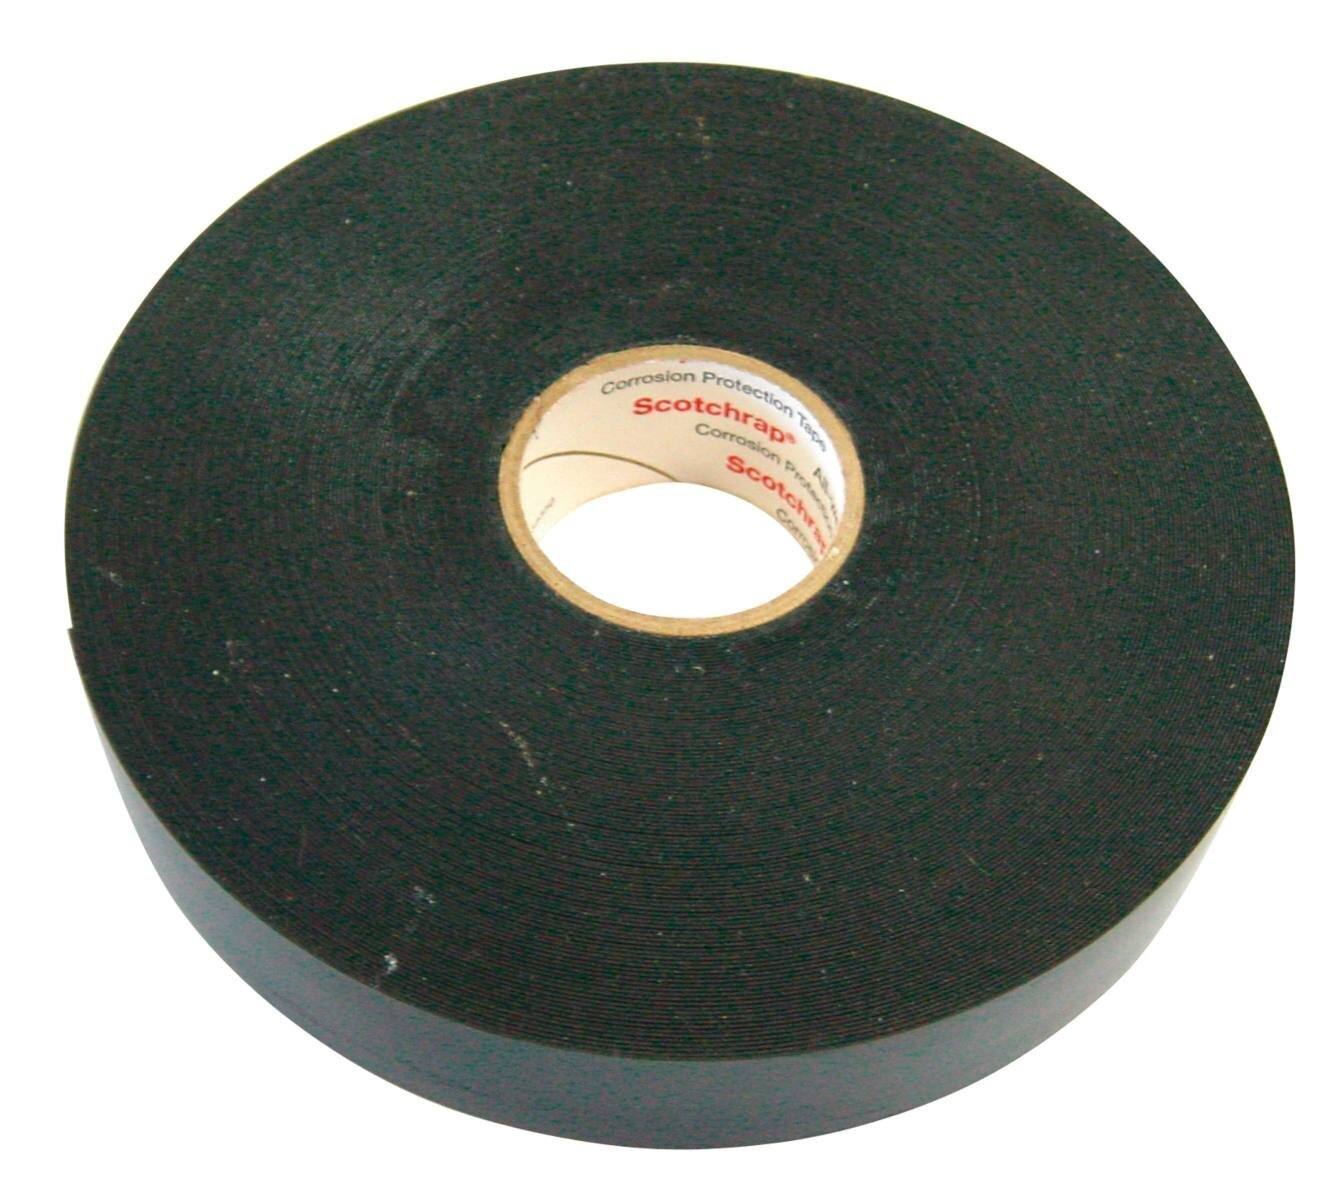 3M Scotchrap 51 corrosion protection tape, black, 25 mm x 30 m, 0.5 mm